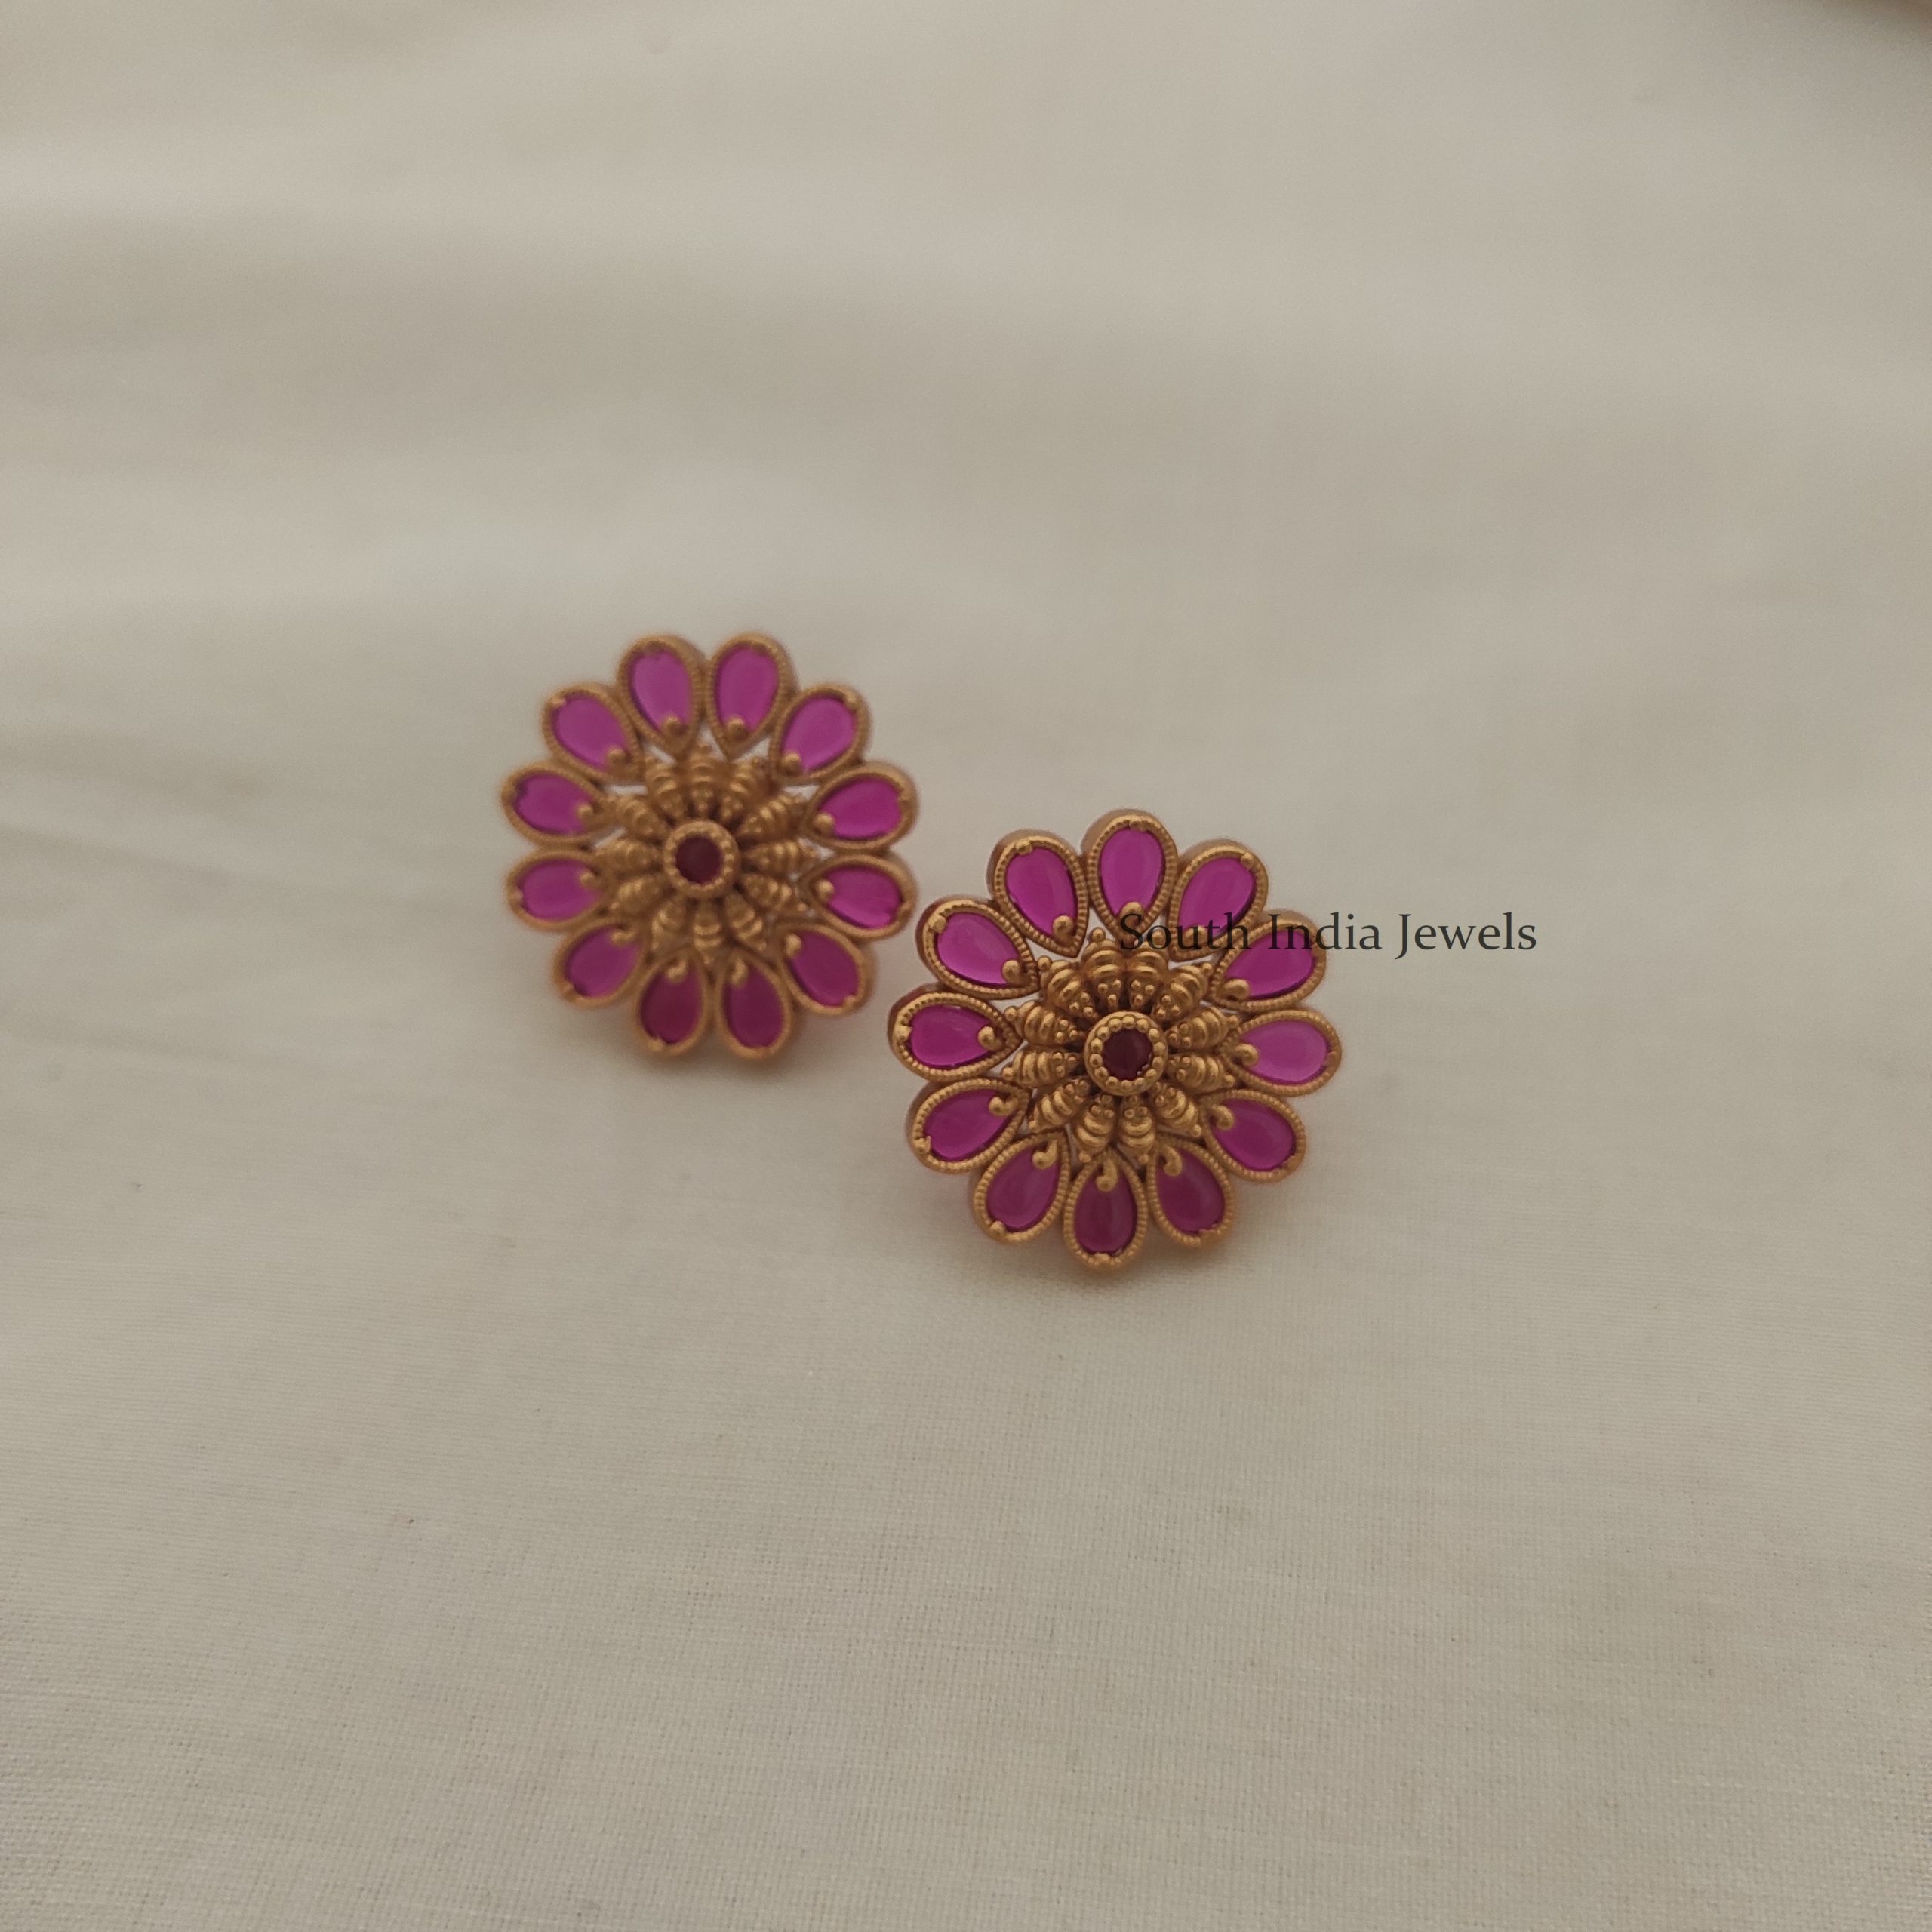 Flower Design Kemp Stone Ear Studs - South India Jewels